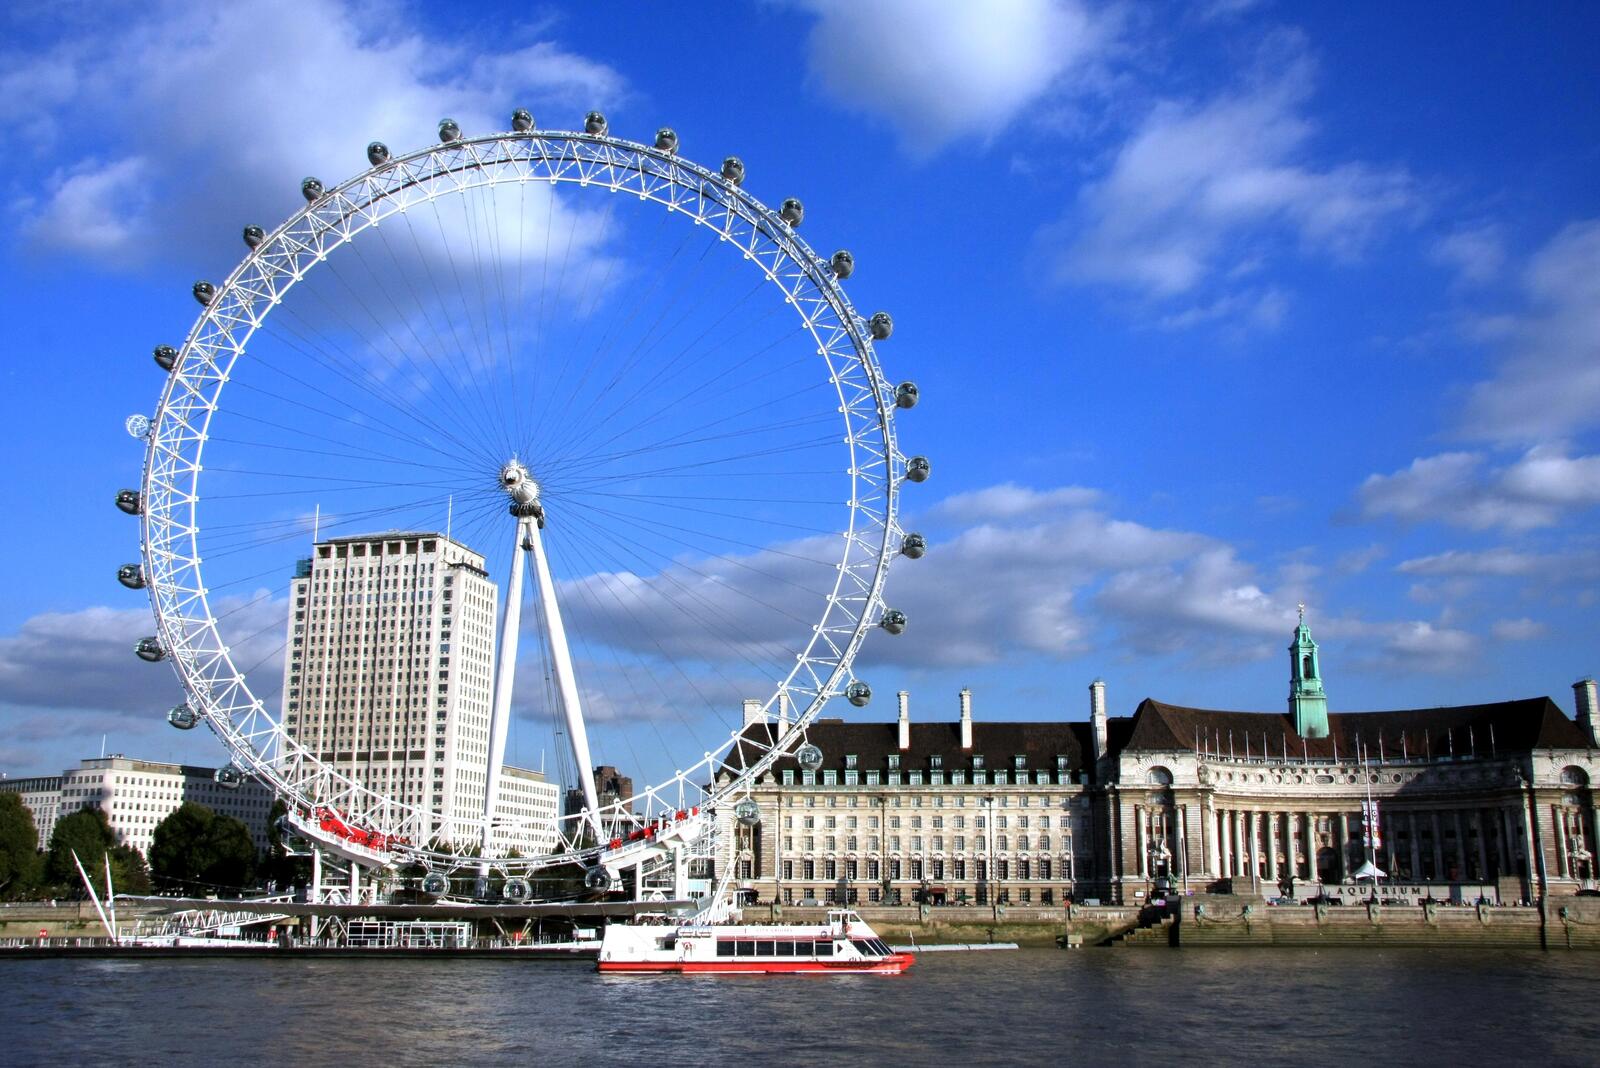 Free photo A Ferris wheel on a riverside in England